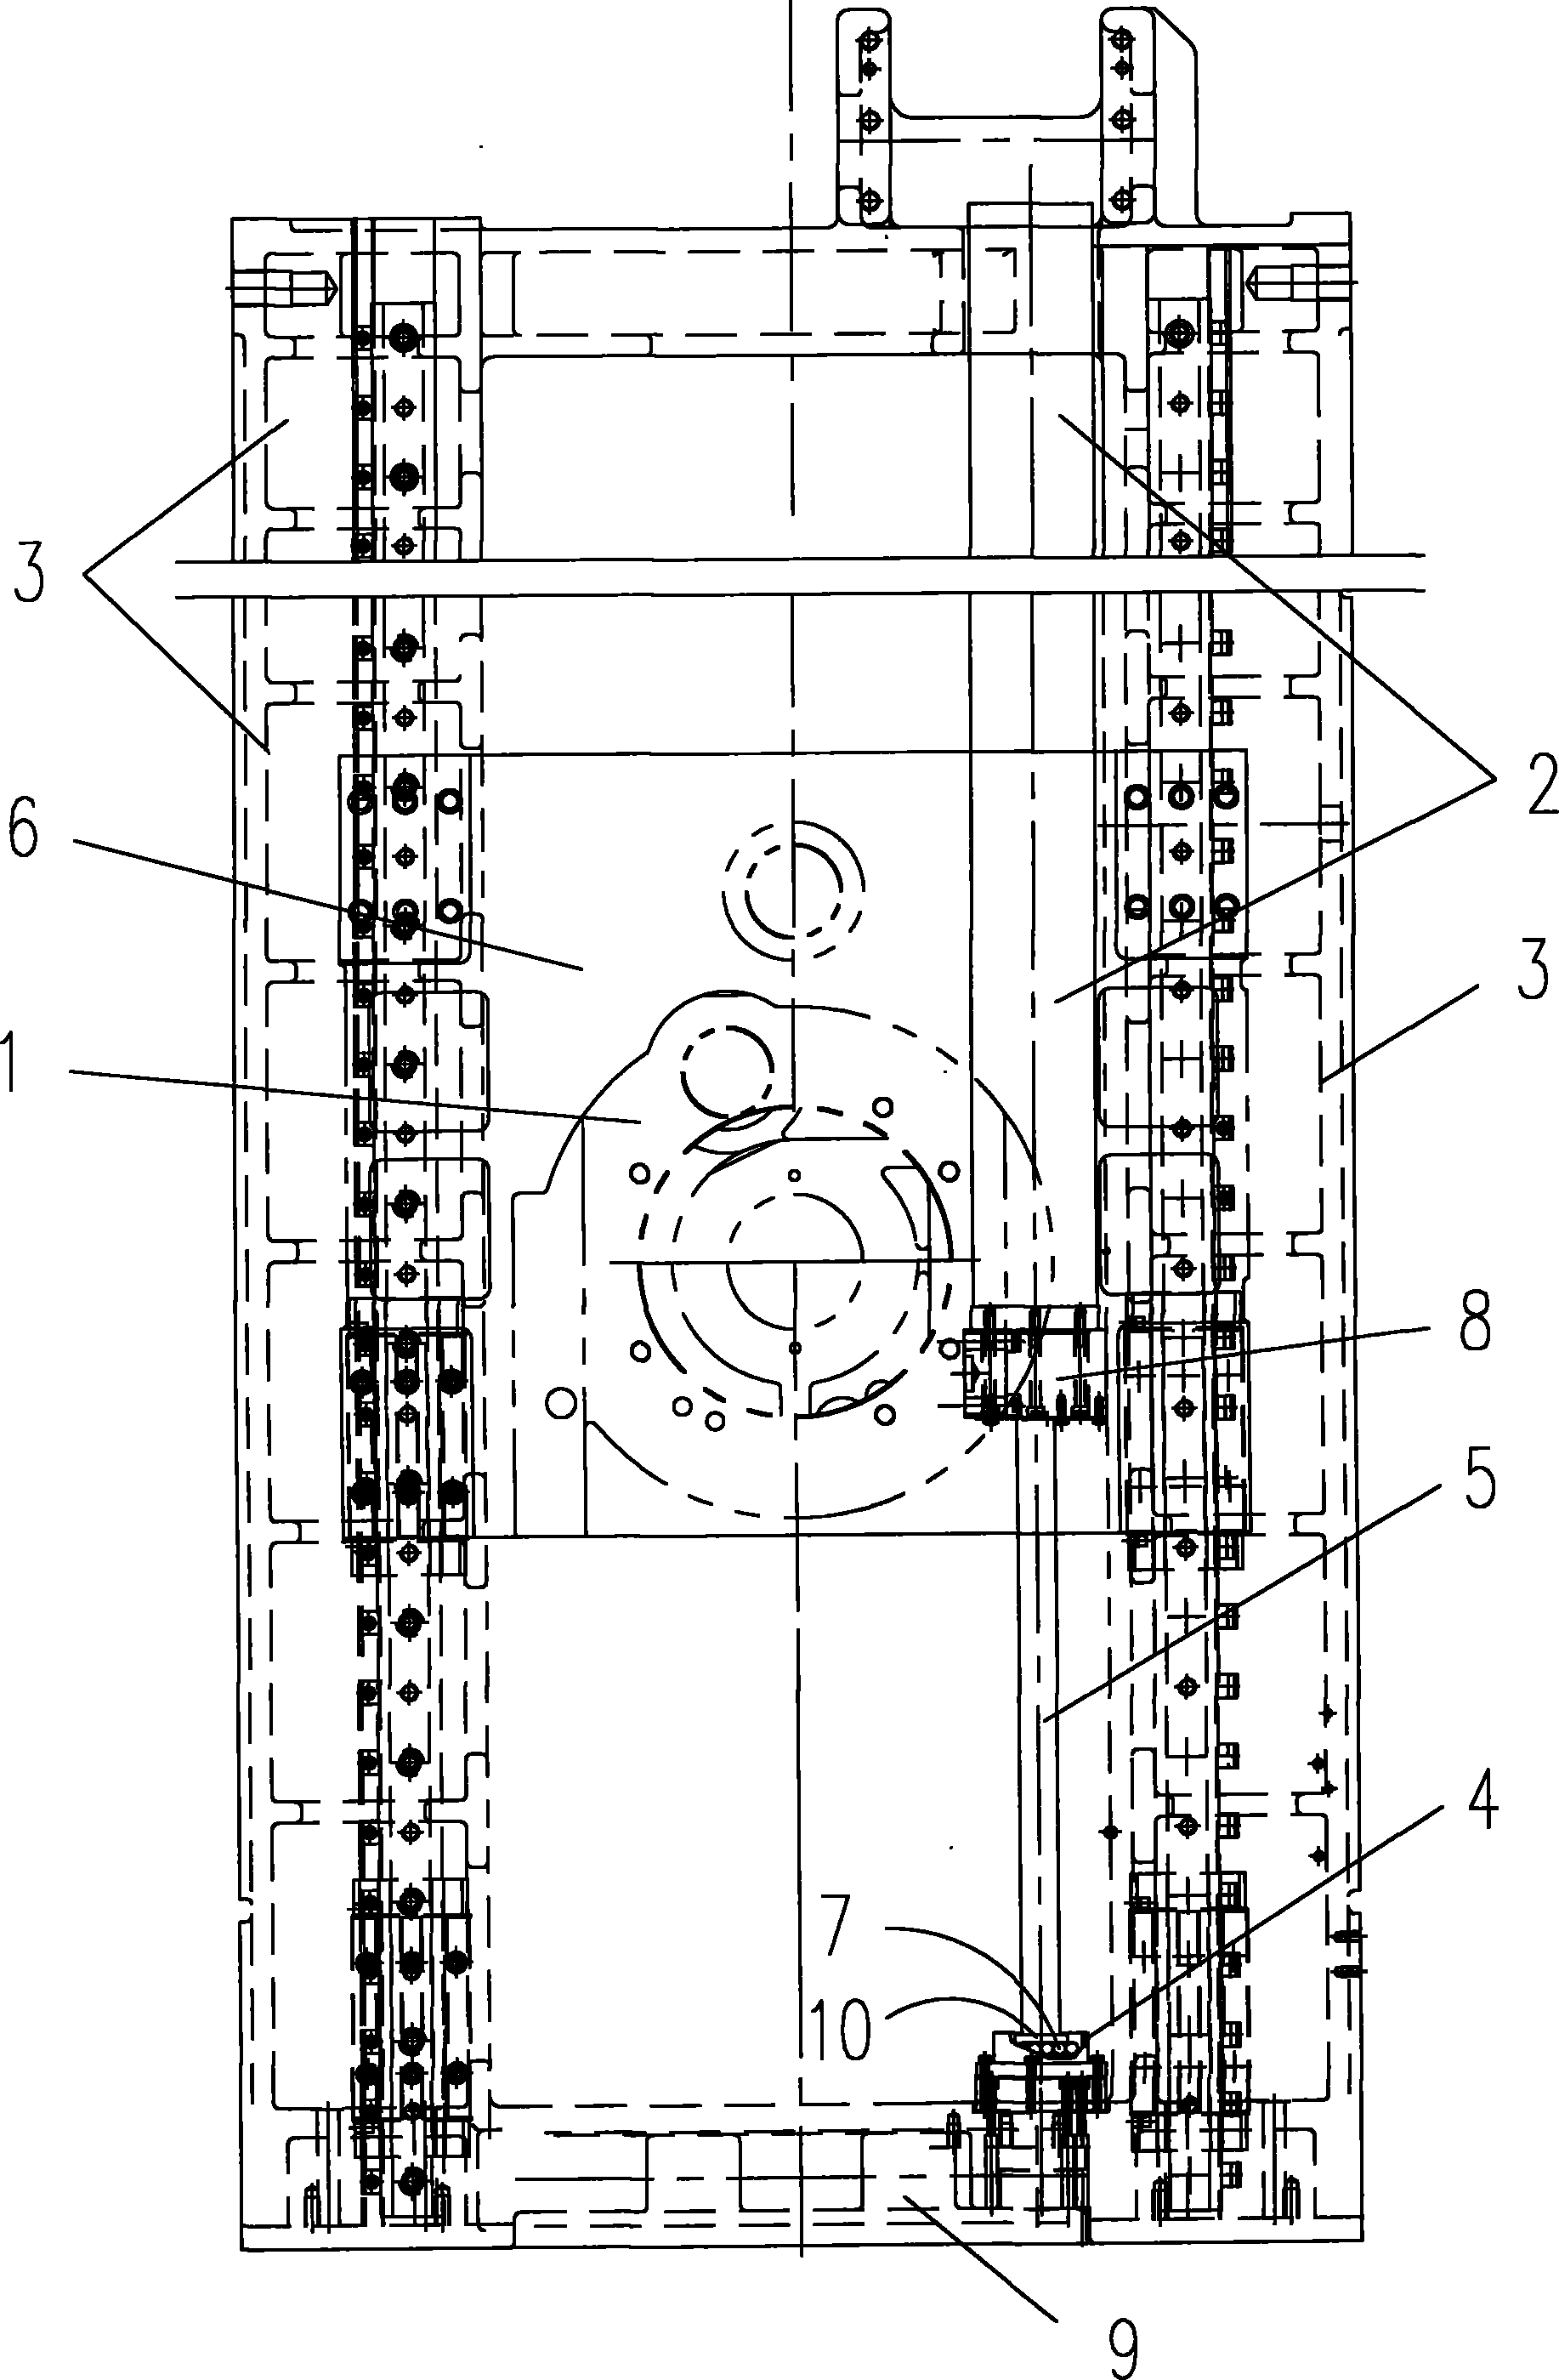 Column type metal cutting machine